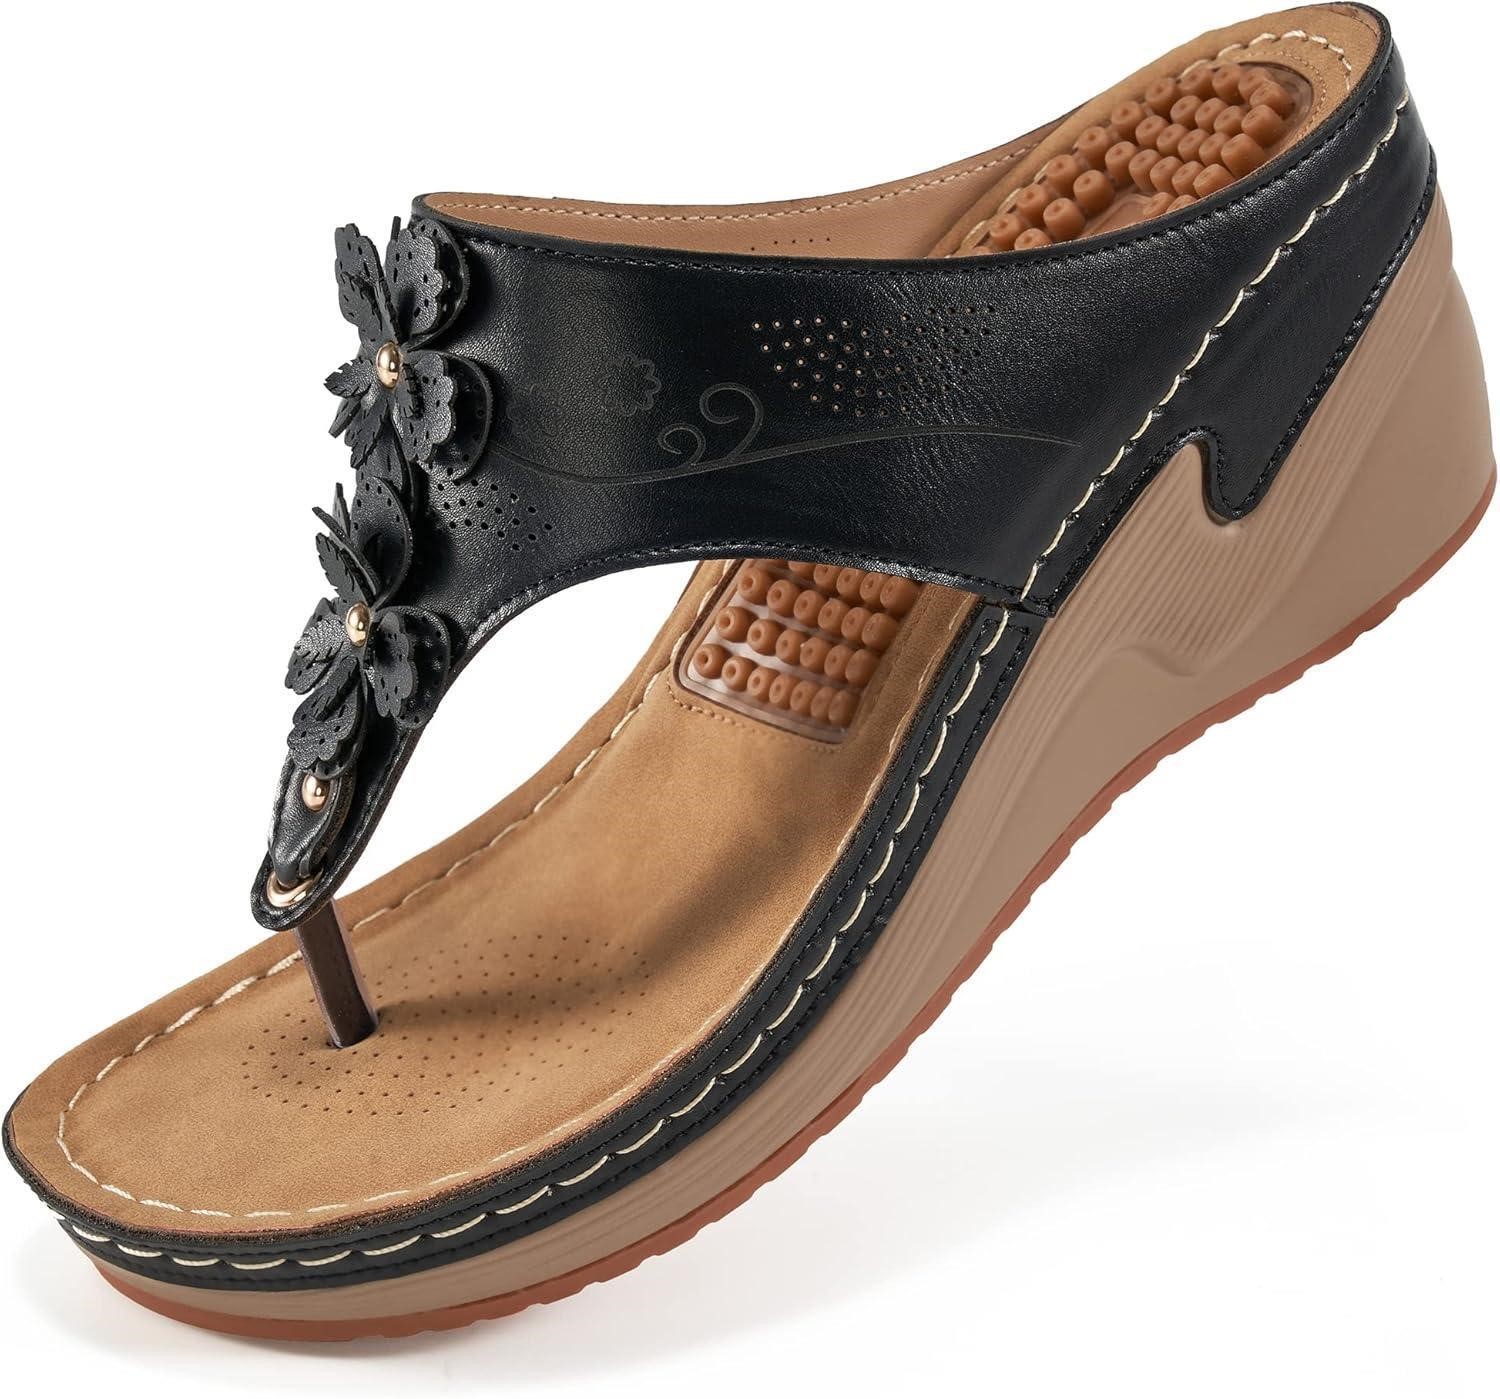 SEALED-Flip Flops Sandals for Women